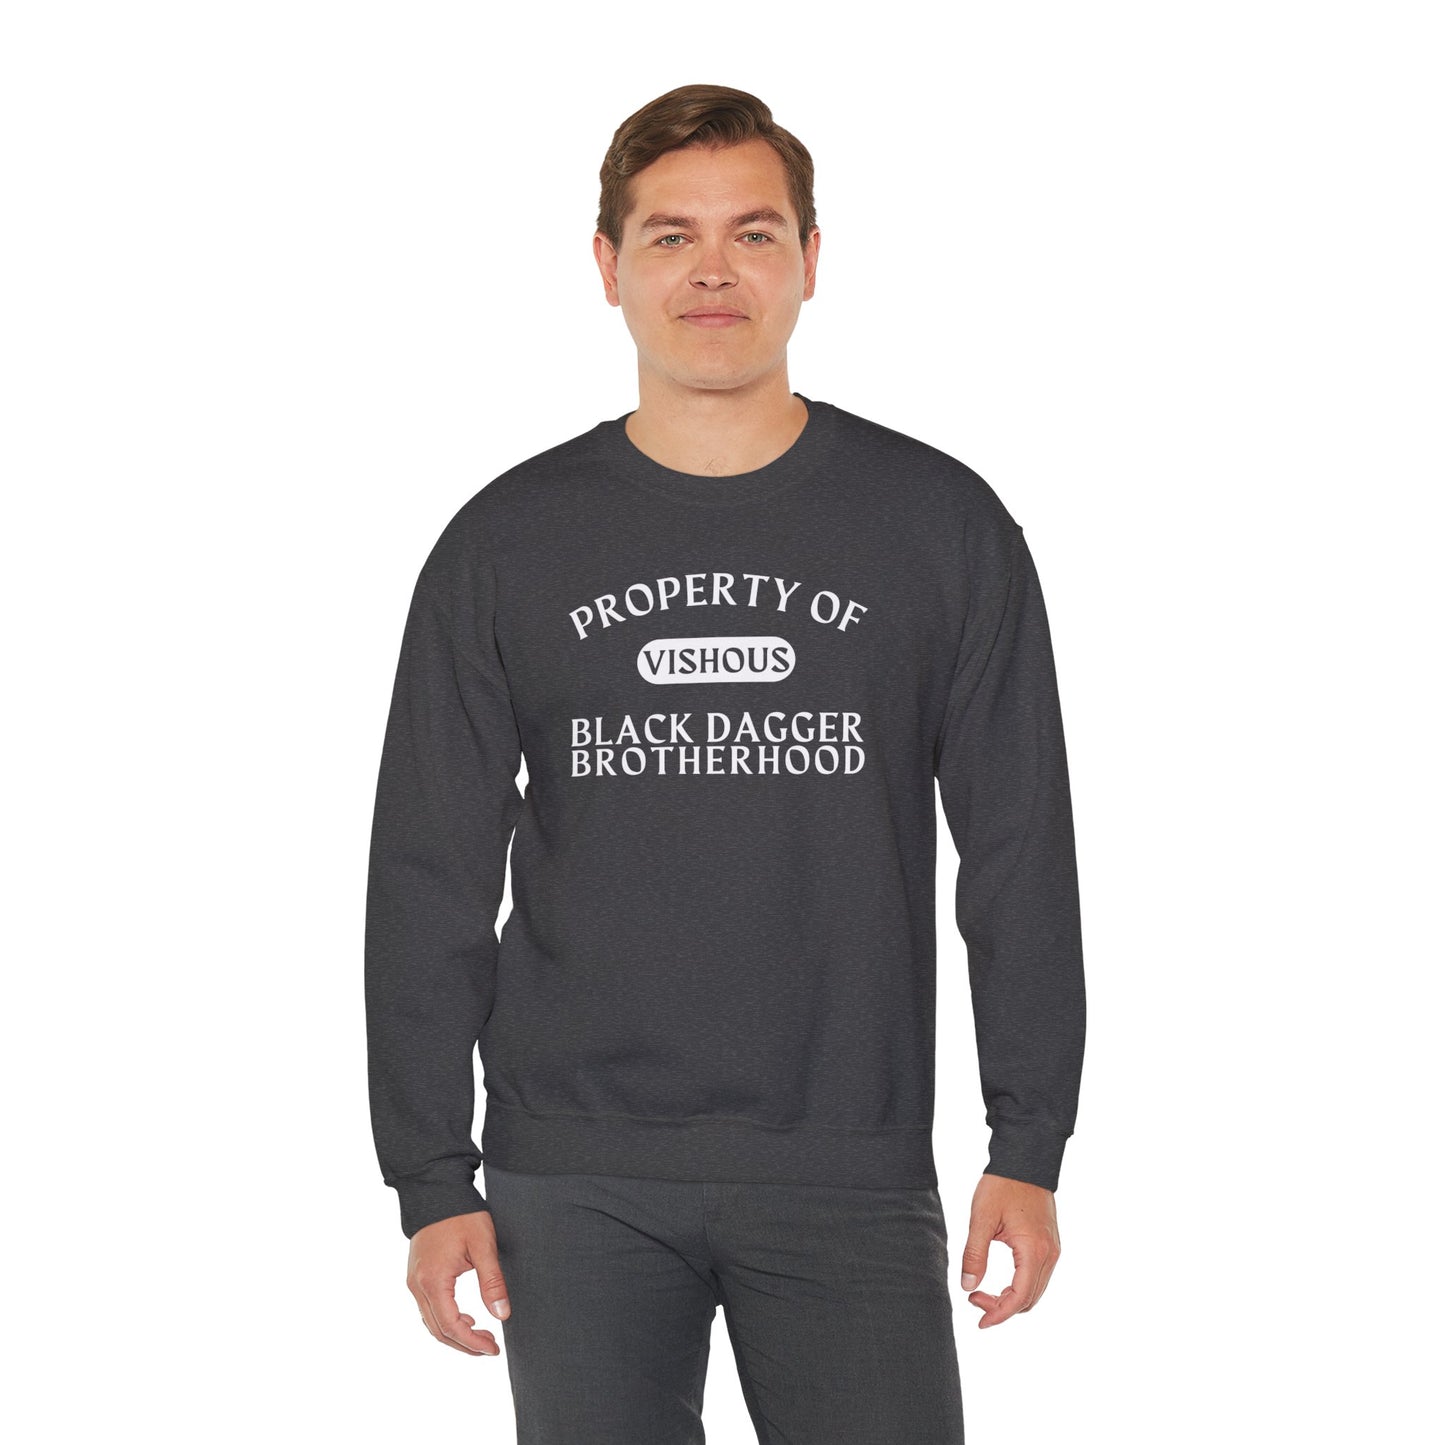 Vishous - Black Dagger Brotherhood Crewneck Sweatshirt Pullover